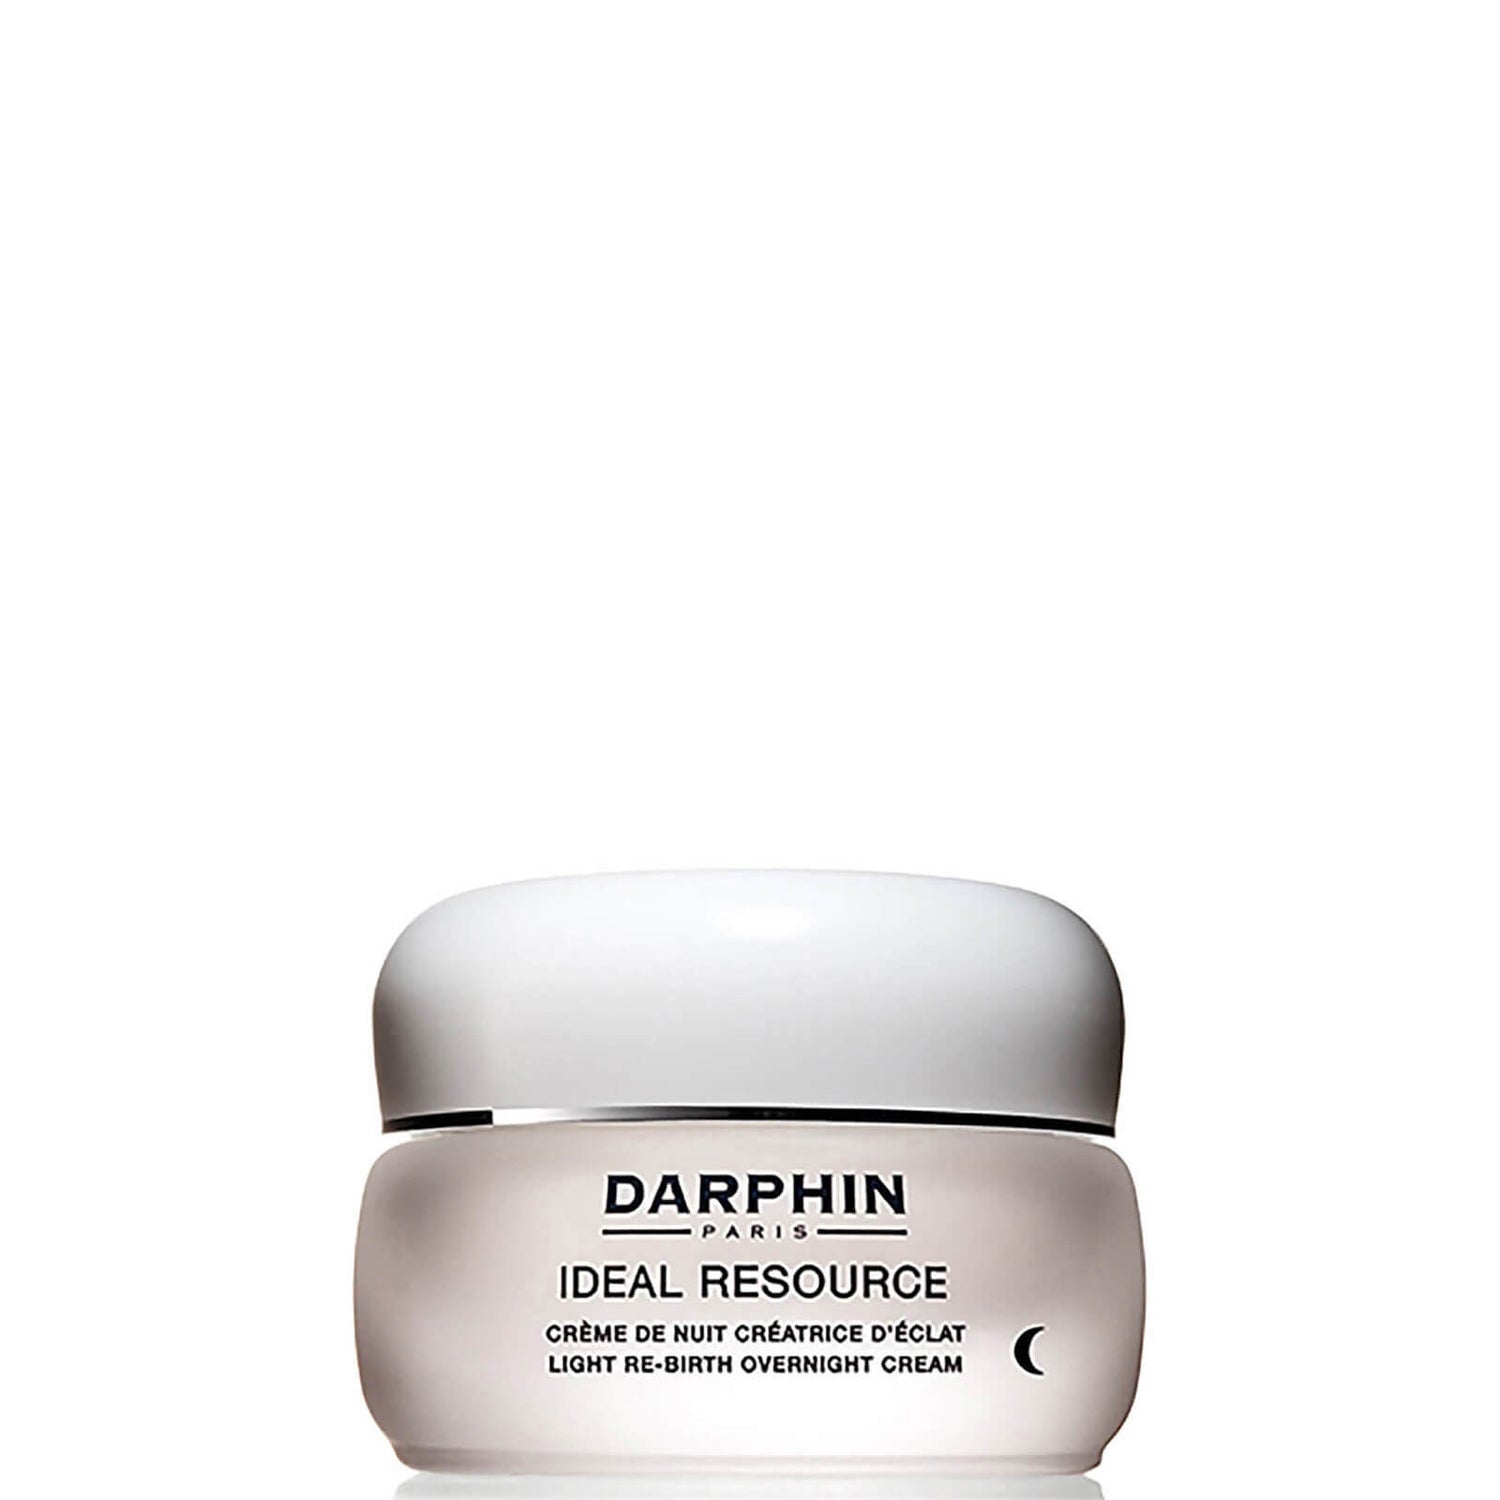 Darphin Ideal Resource Light Re-Birth Overnight Cream (1.7 oz.)